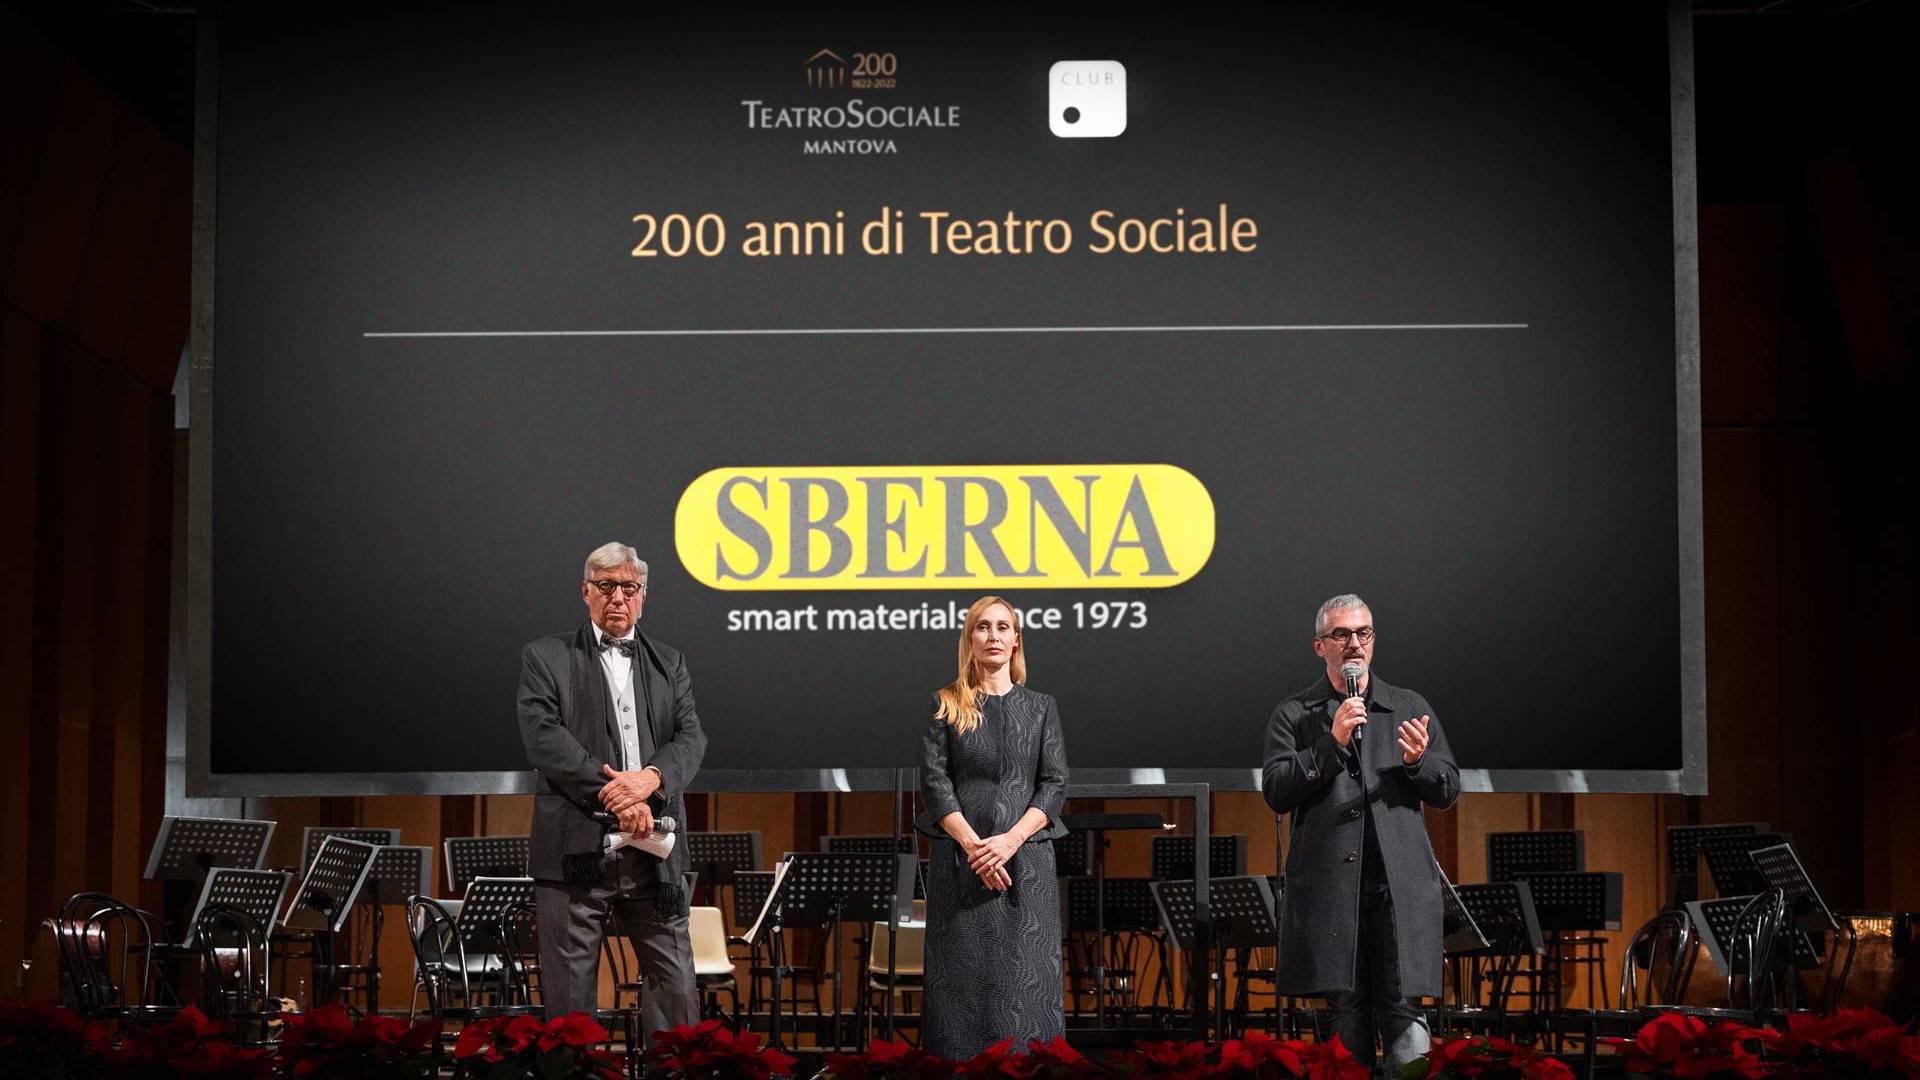 Teatro Sociale Mantova Bicentenary Celebration